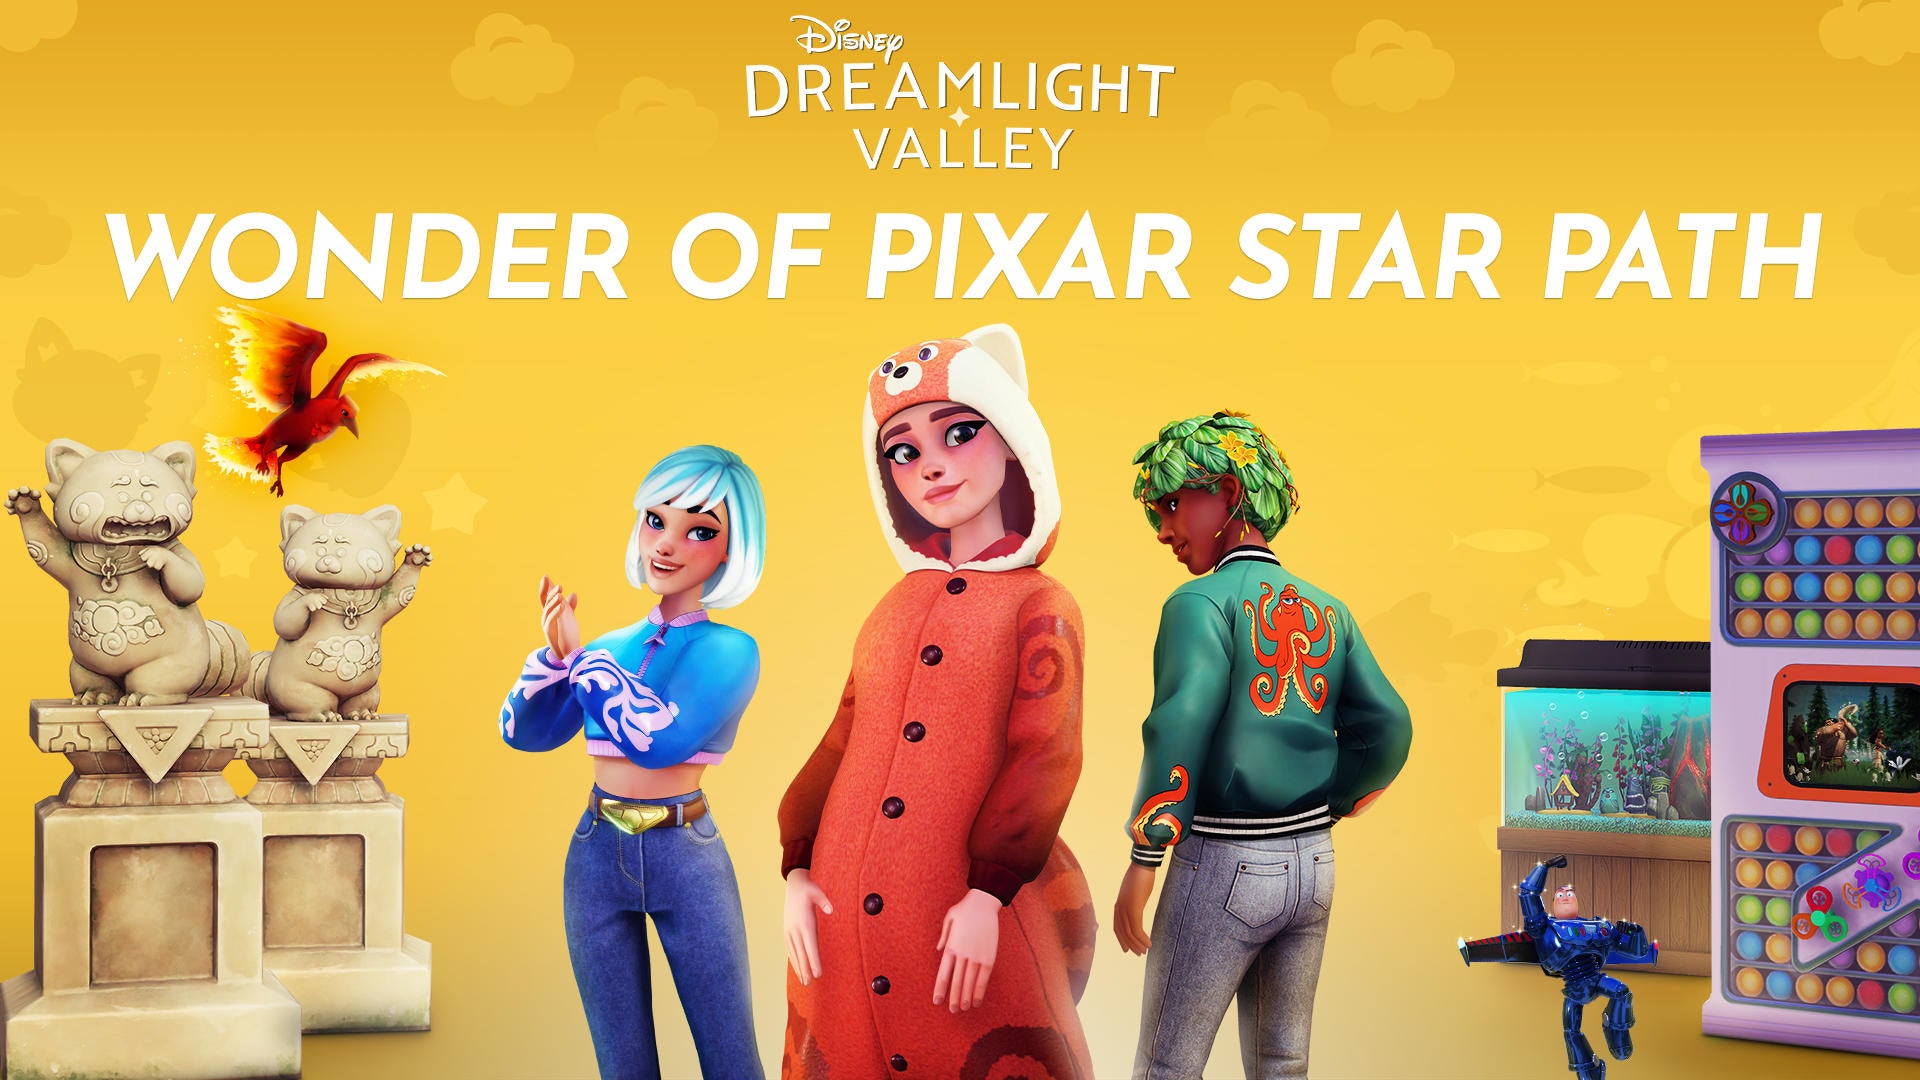 dreamlight-valley-pixar-star-path.jpg